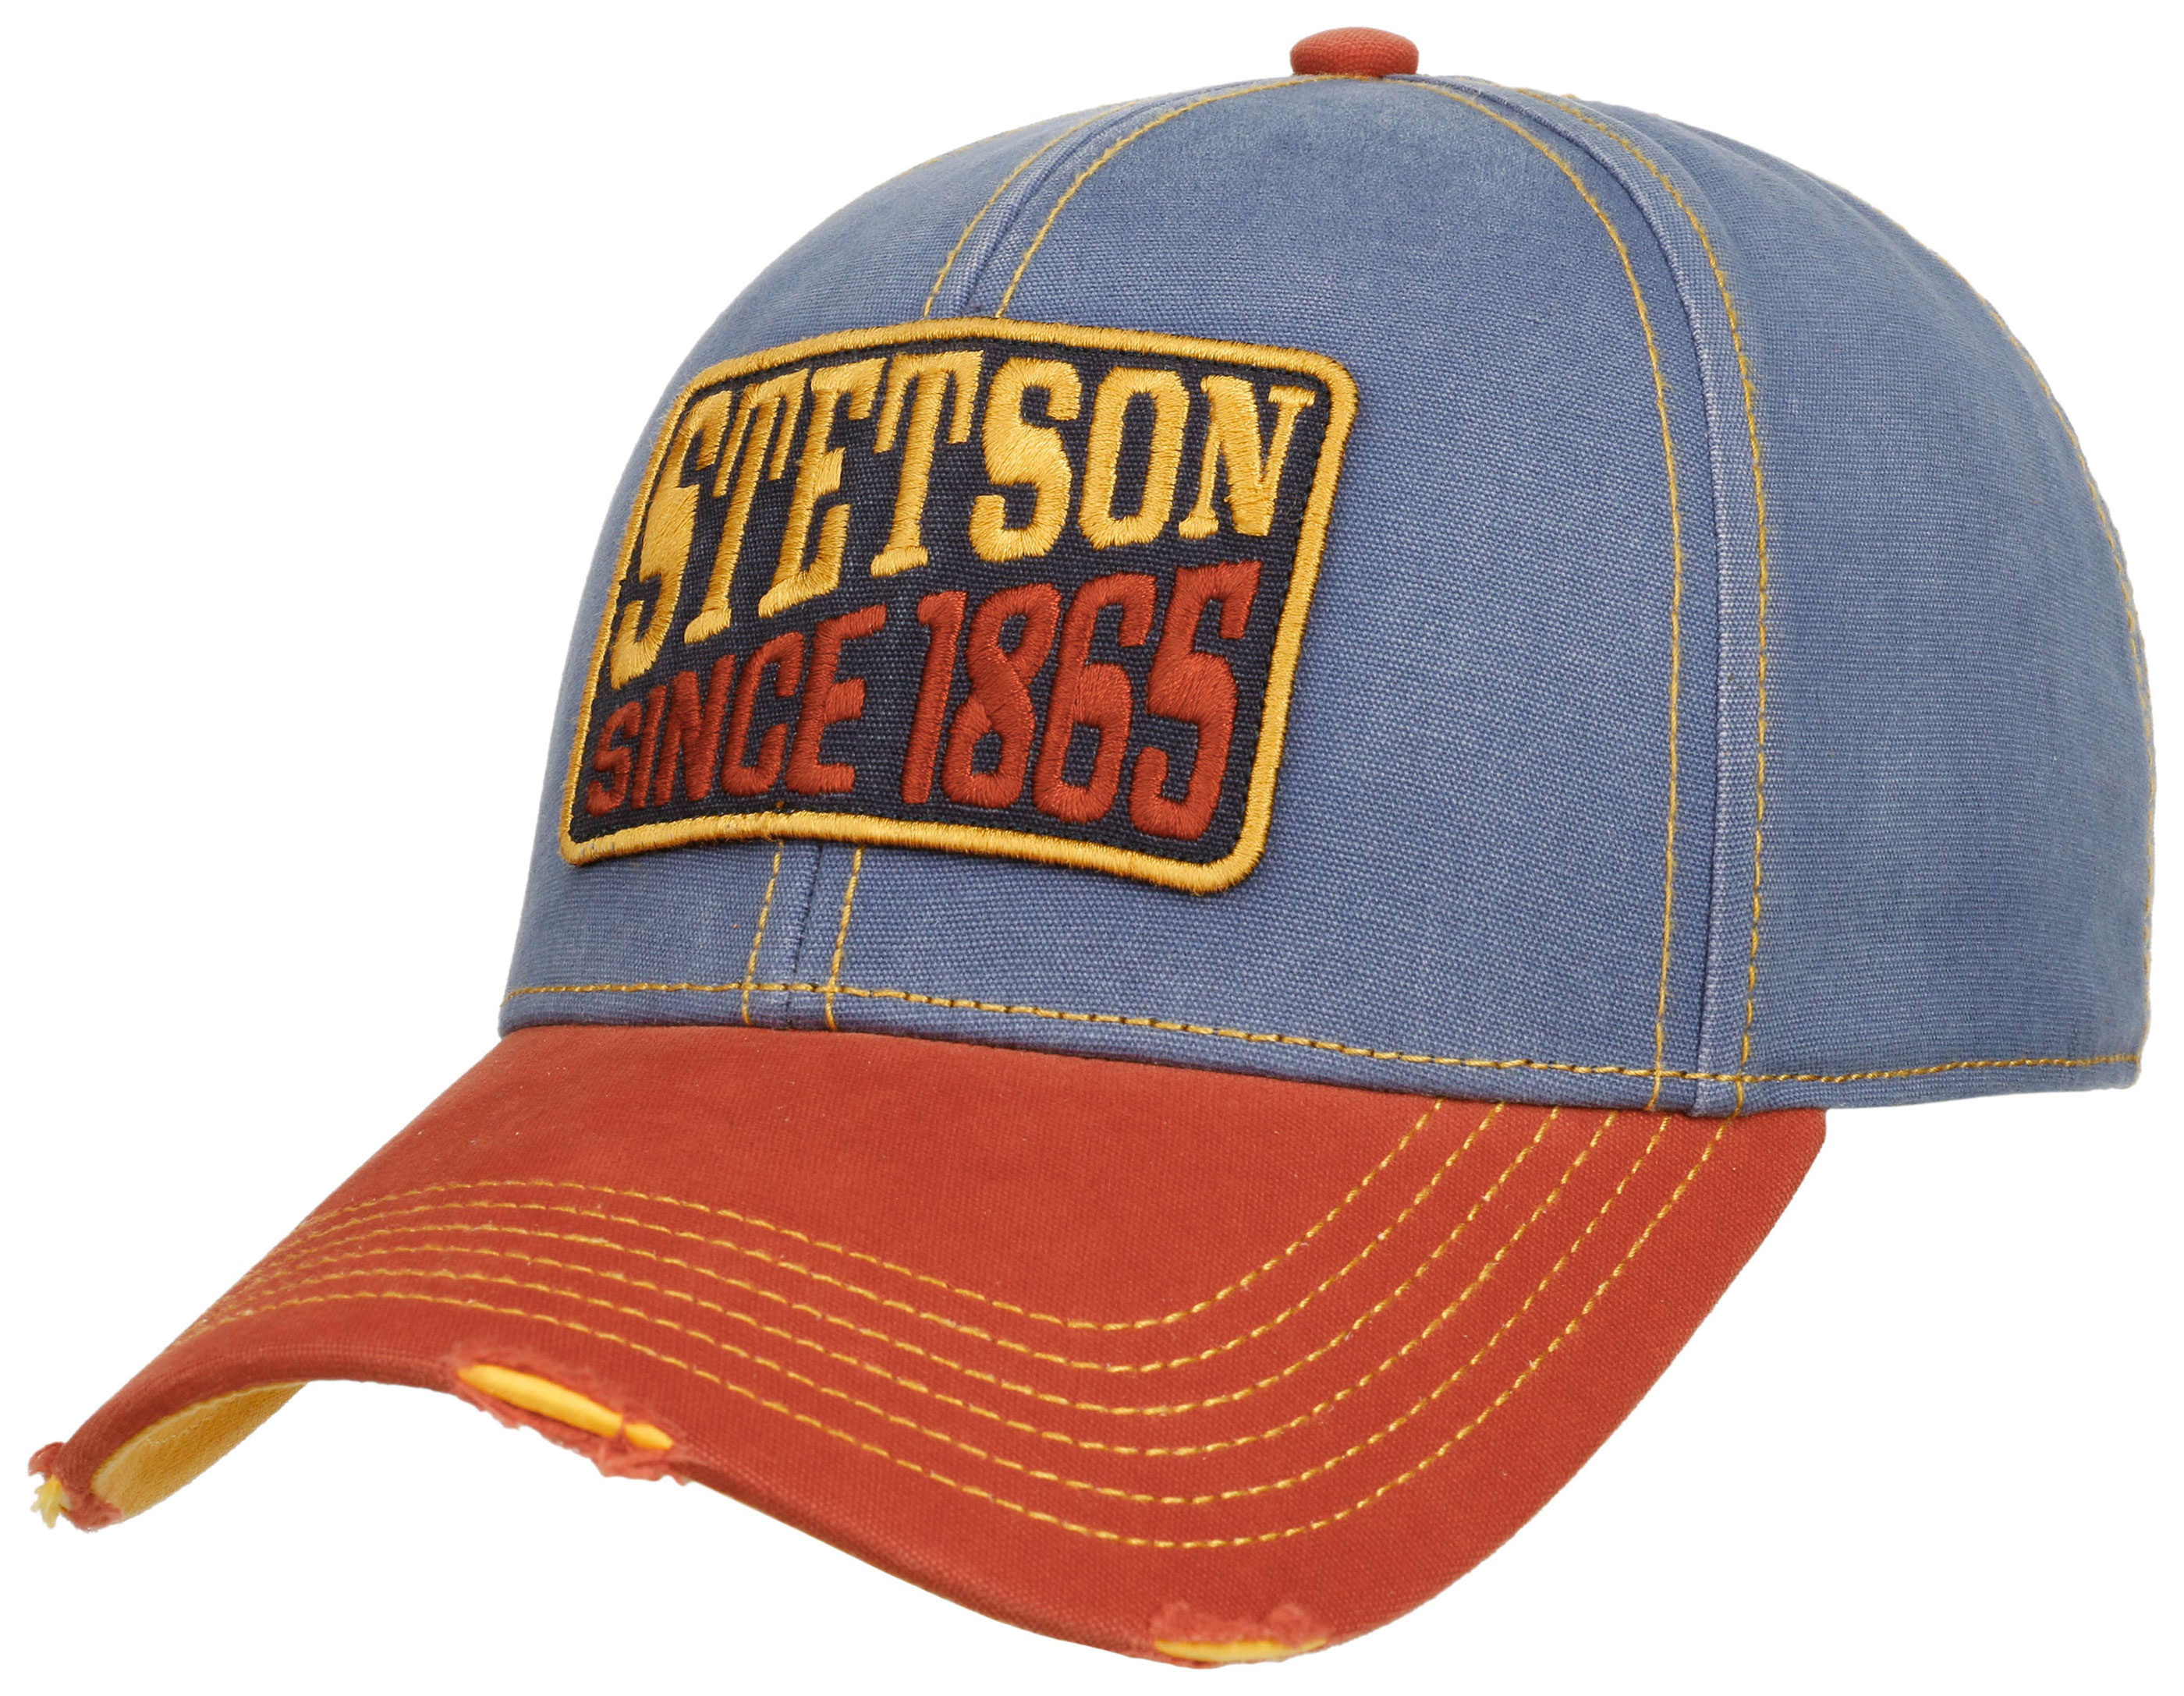 Stetson Baseball Cap Since 1865 Vintage Distressed Baseball Cap